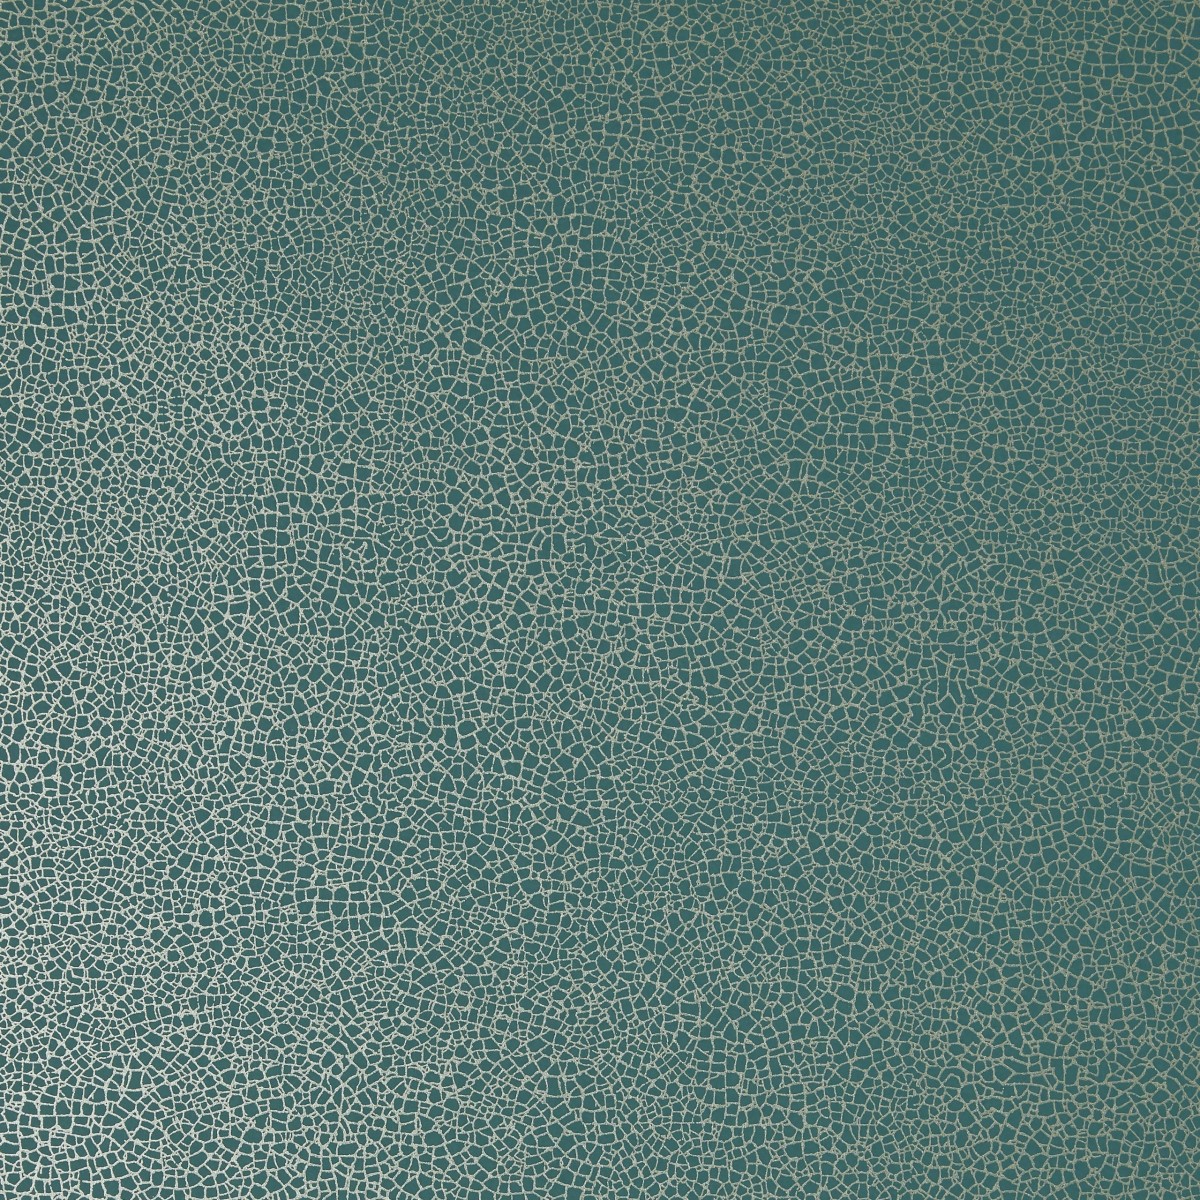 Tapet Emile, Emerald Green Luxury Crackle, 1838 Wallcoverings, 5.3mp / rola, Tapet living 